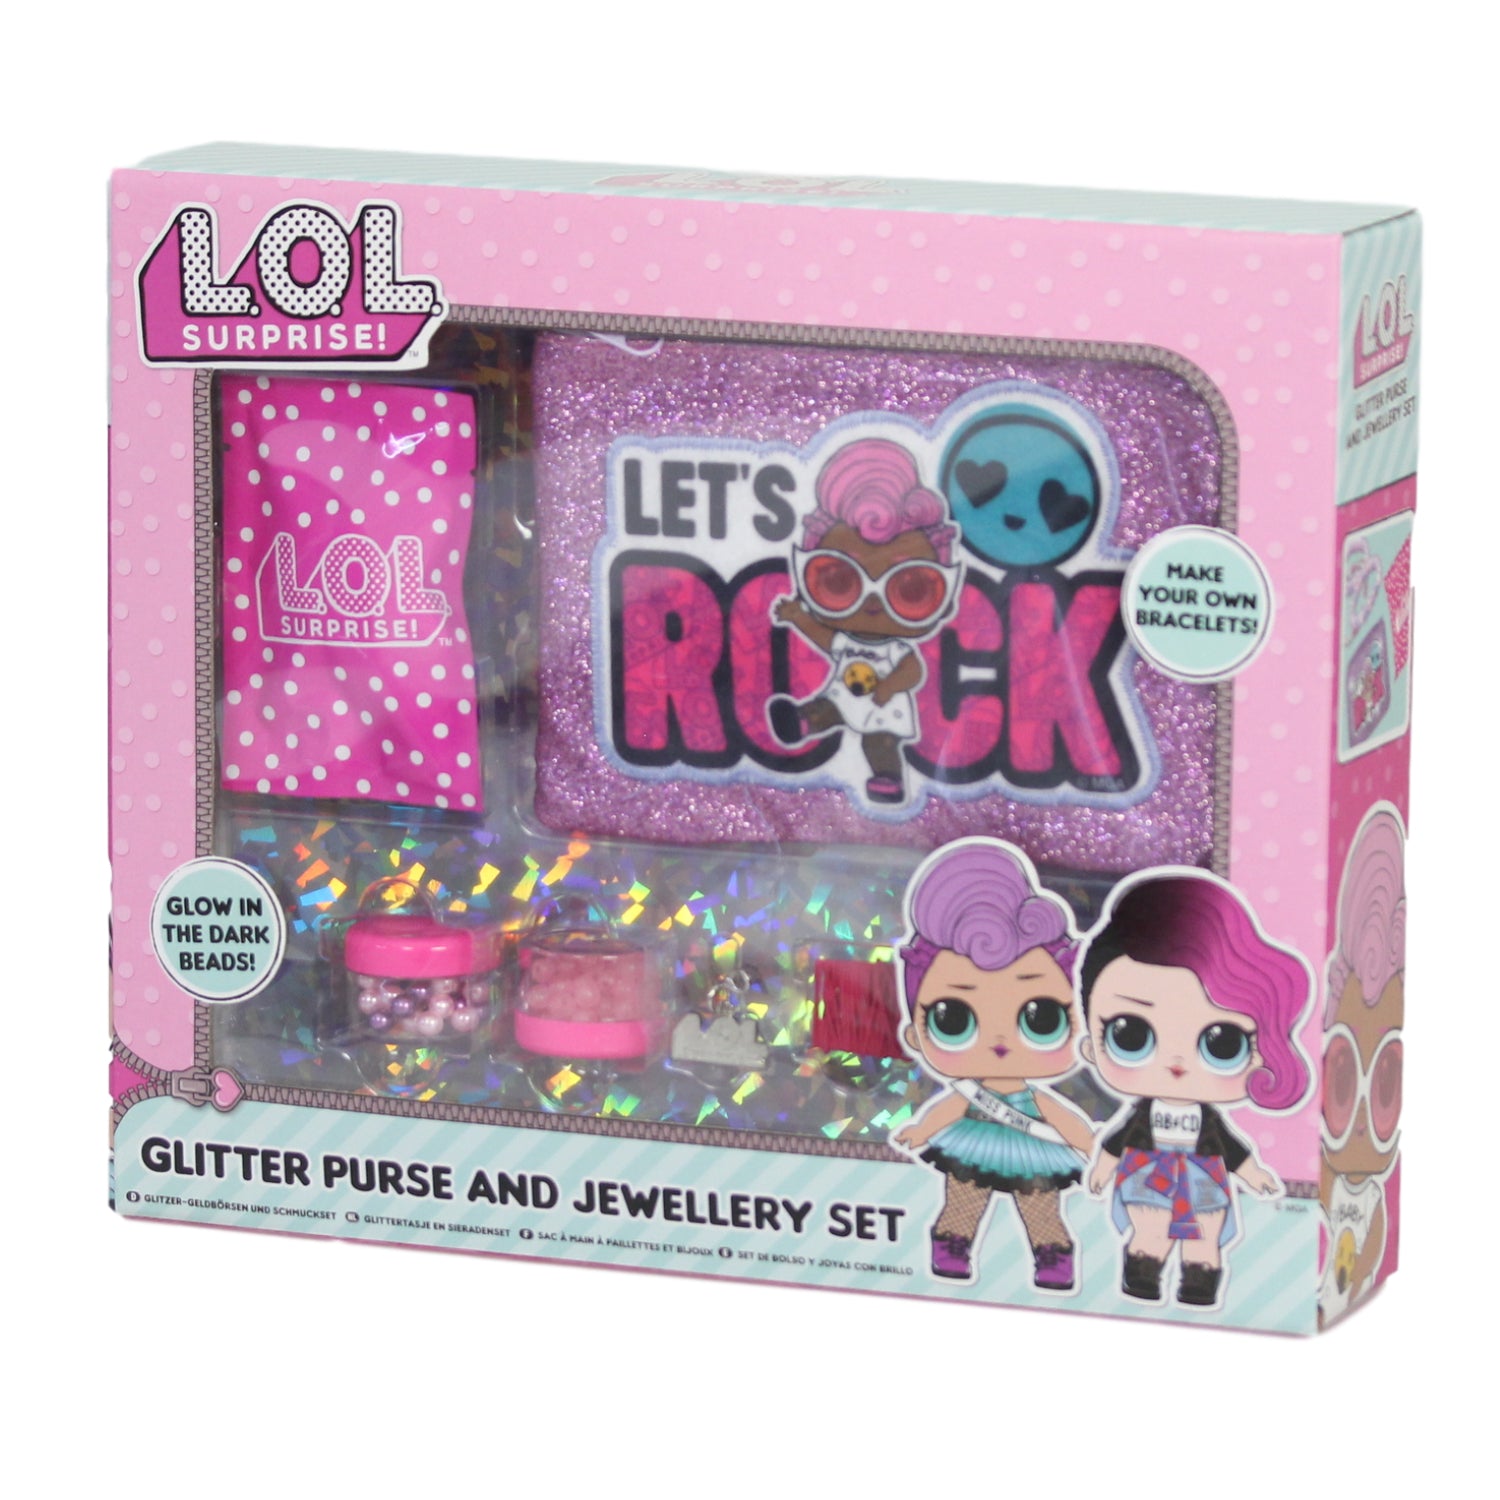 L.O.L. Surprise Glitter Purse and Jewellery Set - Bonnypack